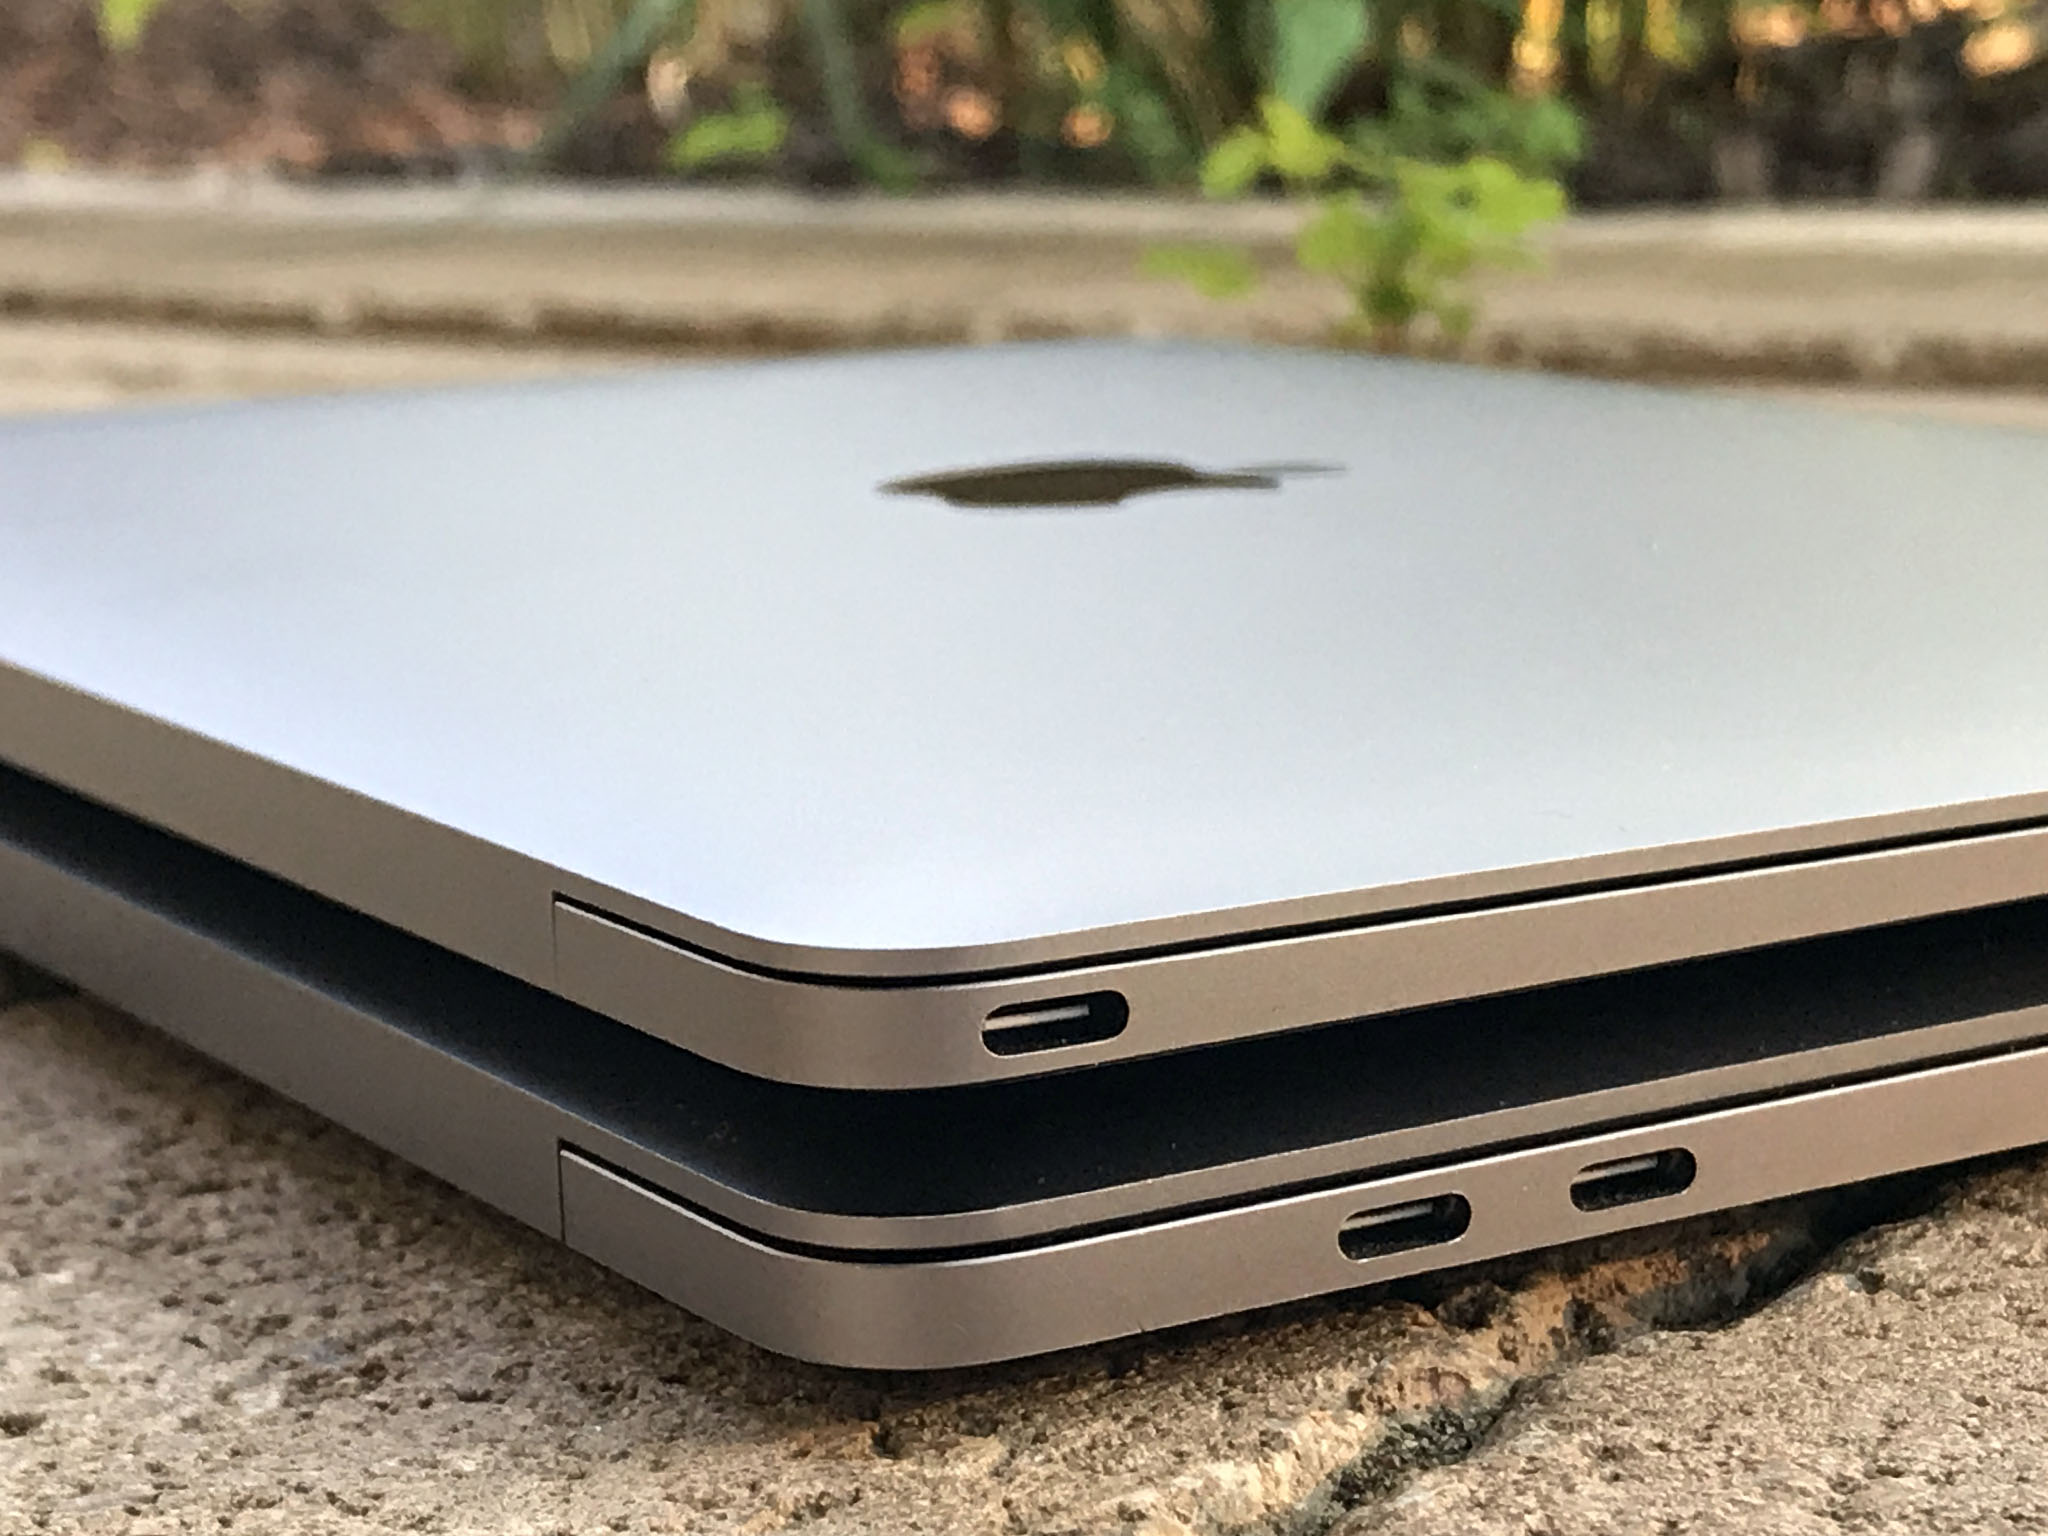 MacBook Pro USB-C Ports